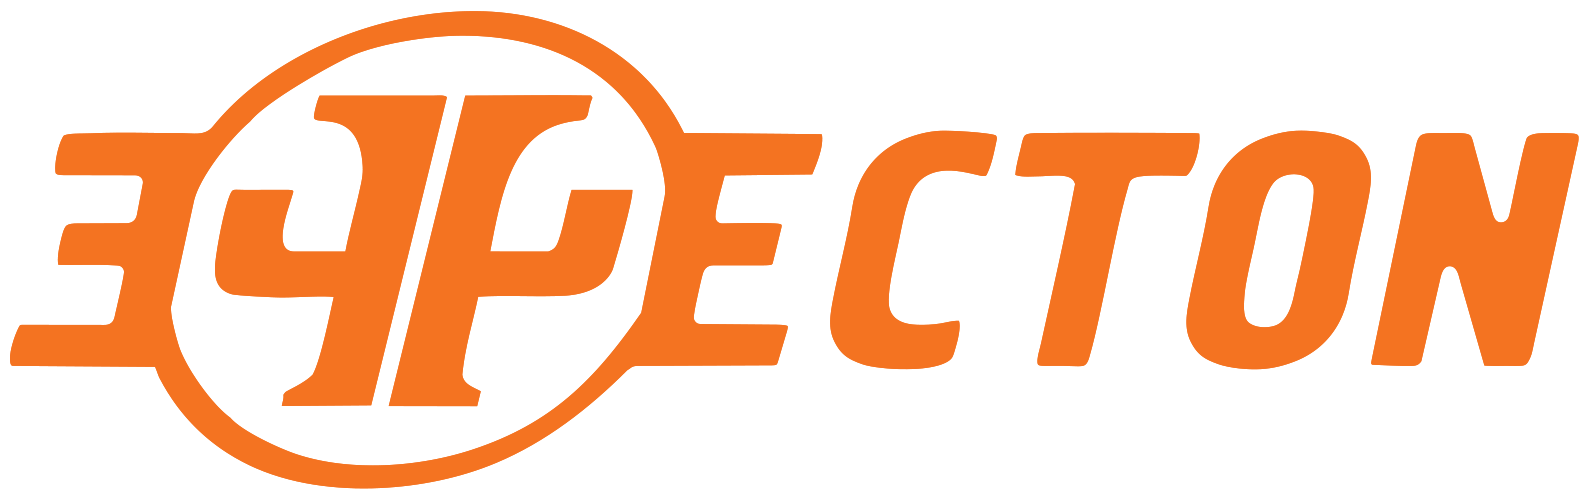 project-logo-1